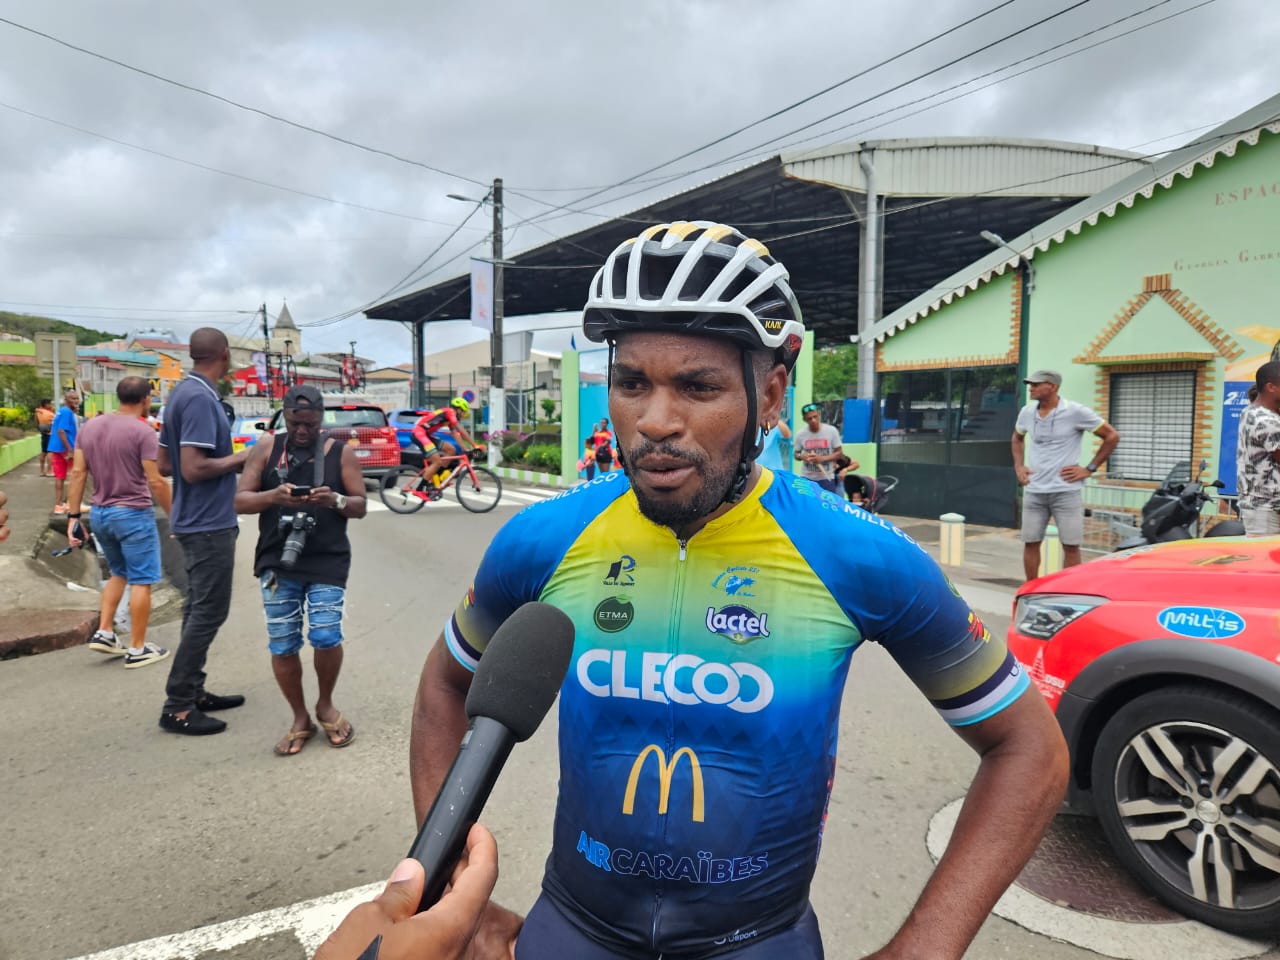     Cyclisme : Mickael Stanislas, champion de Martinique sur route

